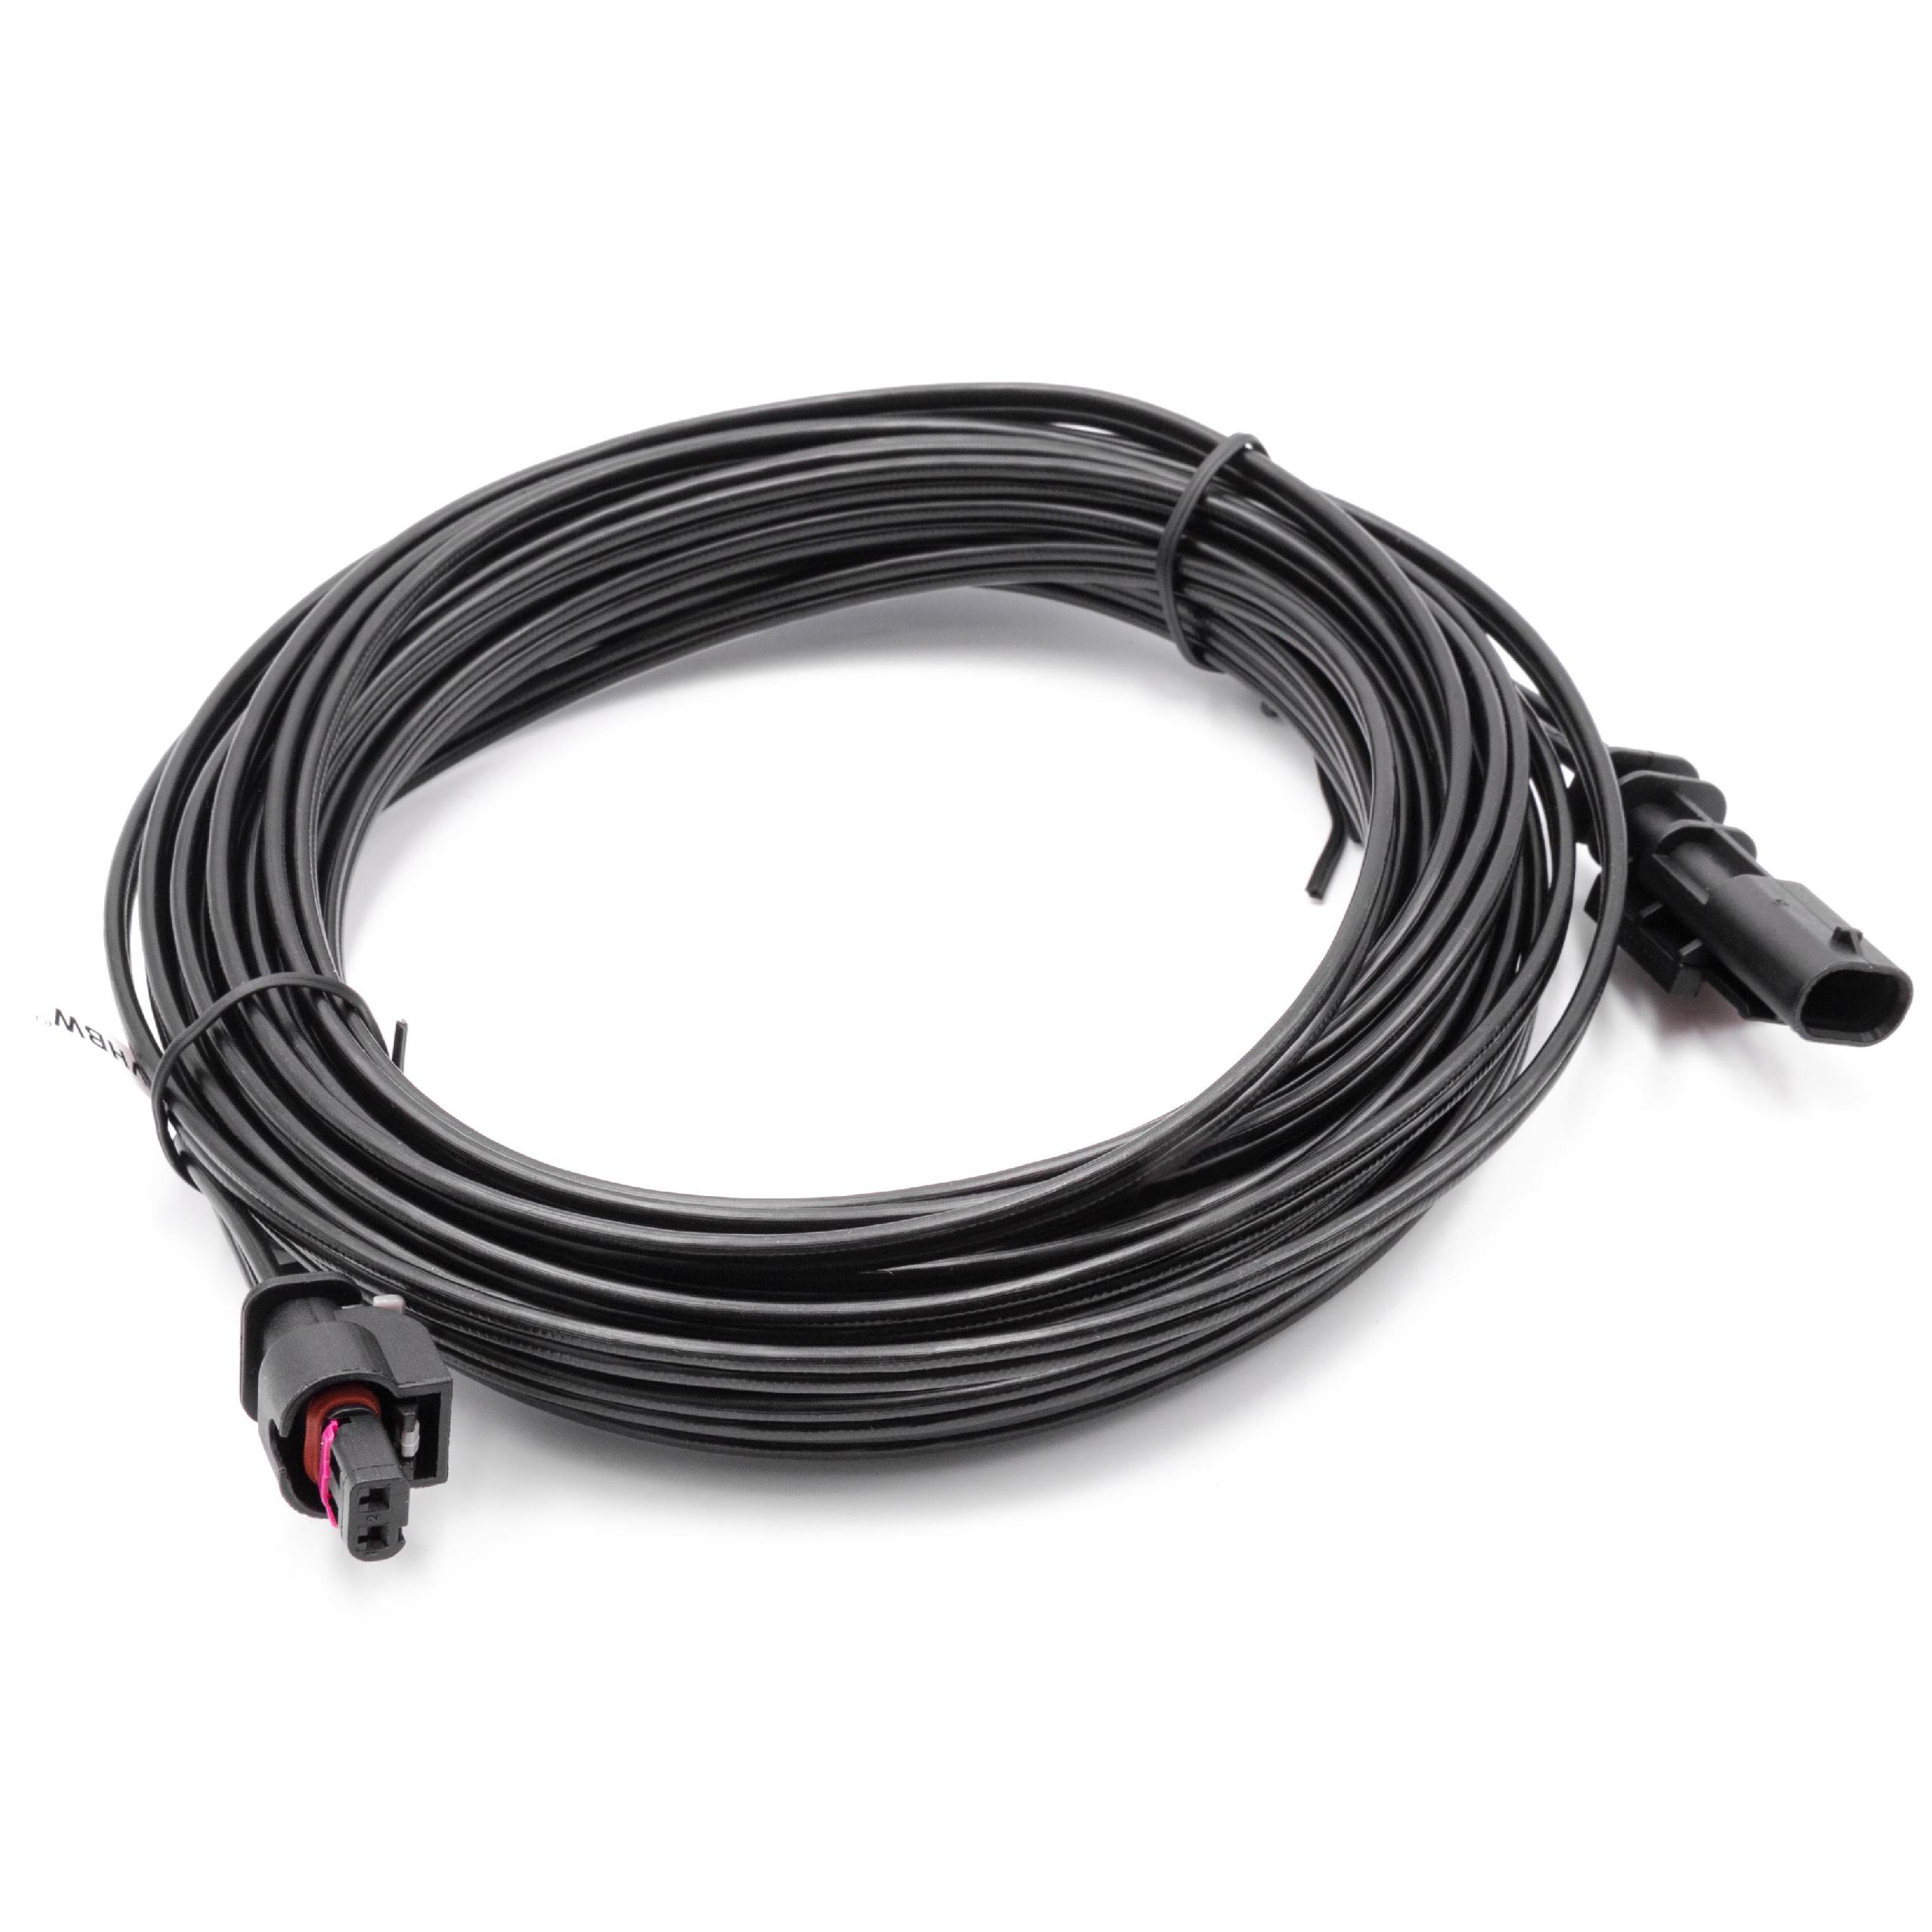 Low Voltage Cable replaces Husqvarna 581 16 66-01, 581 16 66-03 for HusqvarnaRobot Lawn Mower etc. 10 m